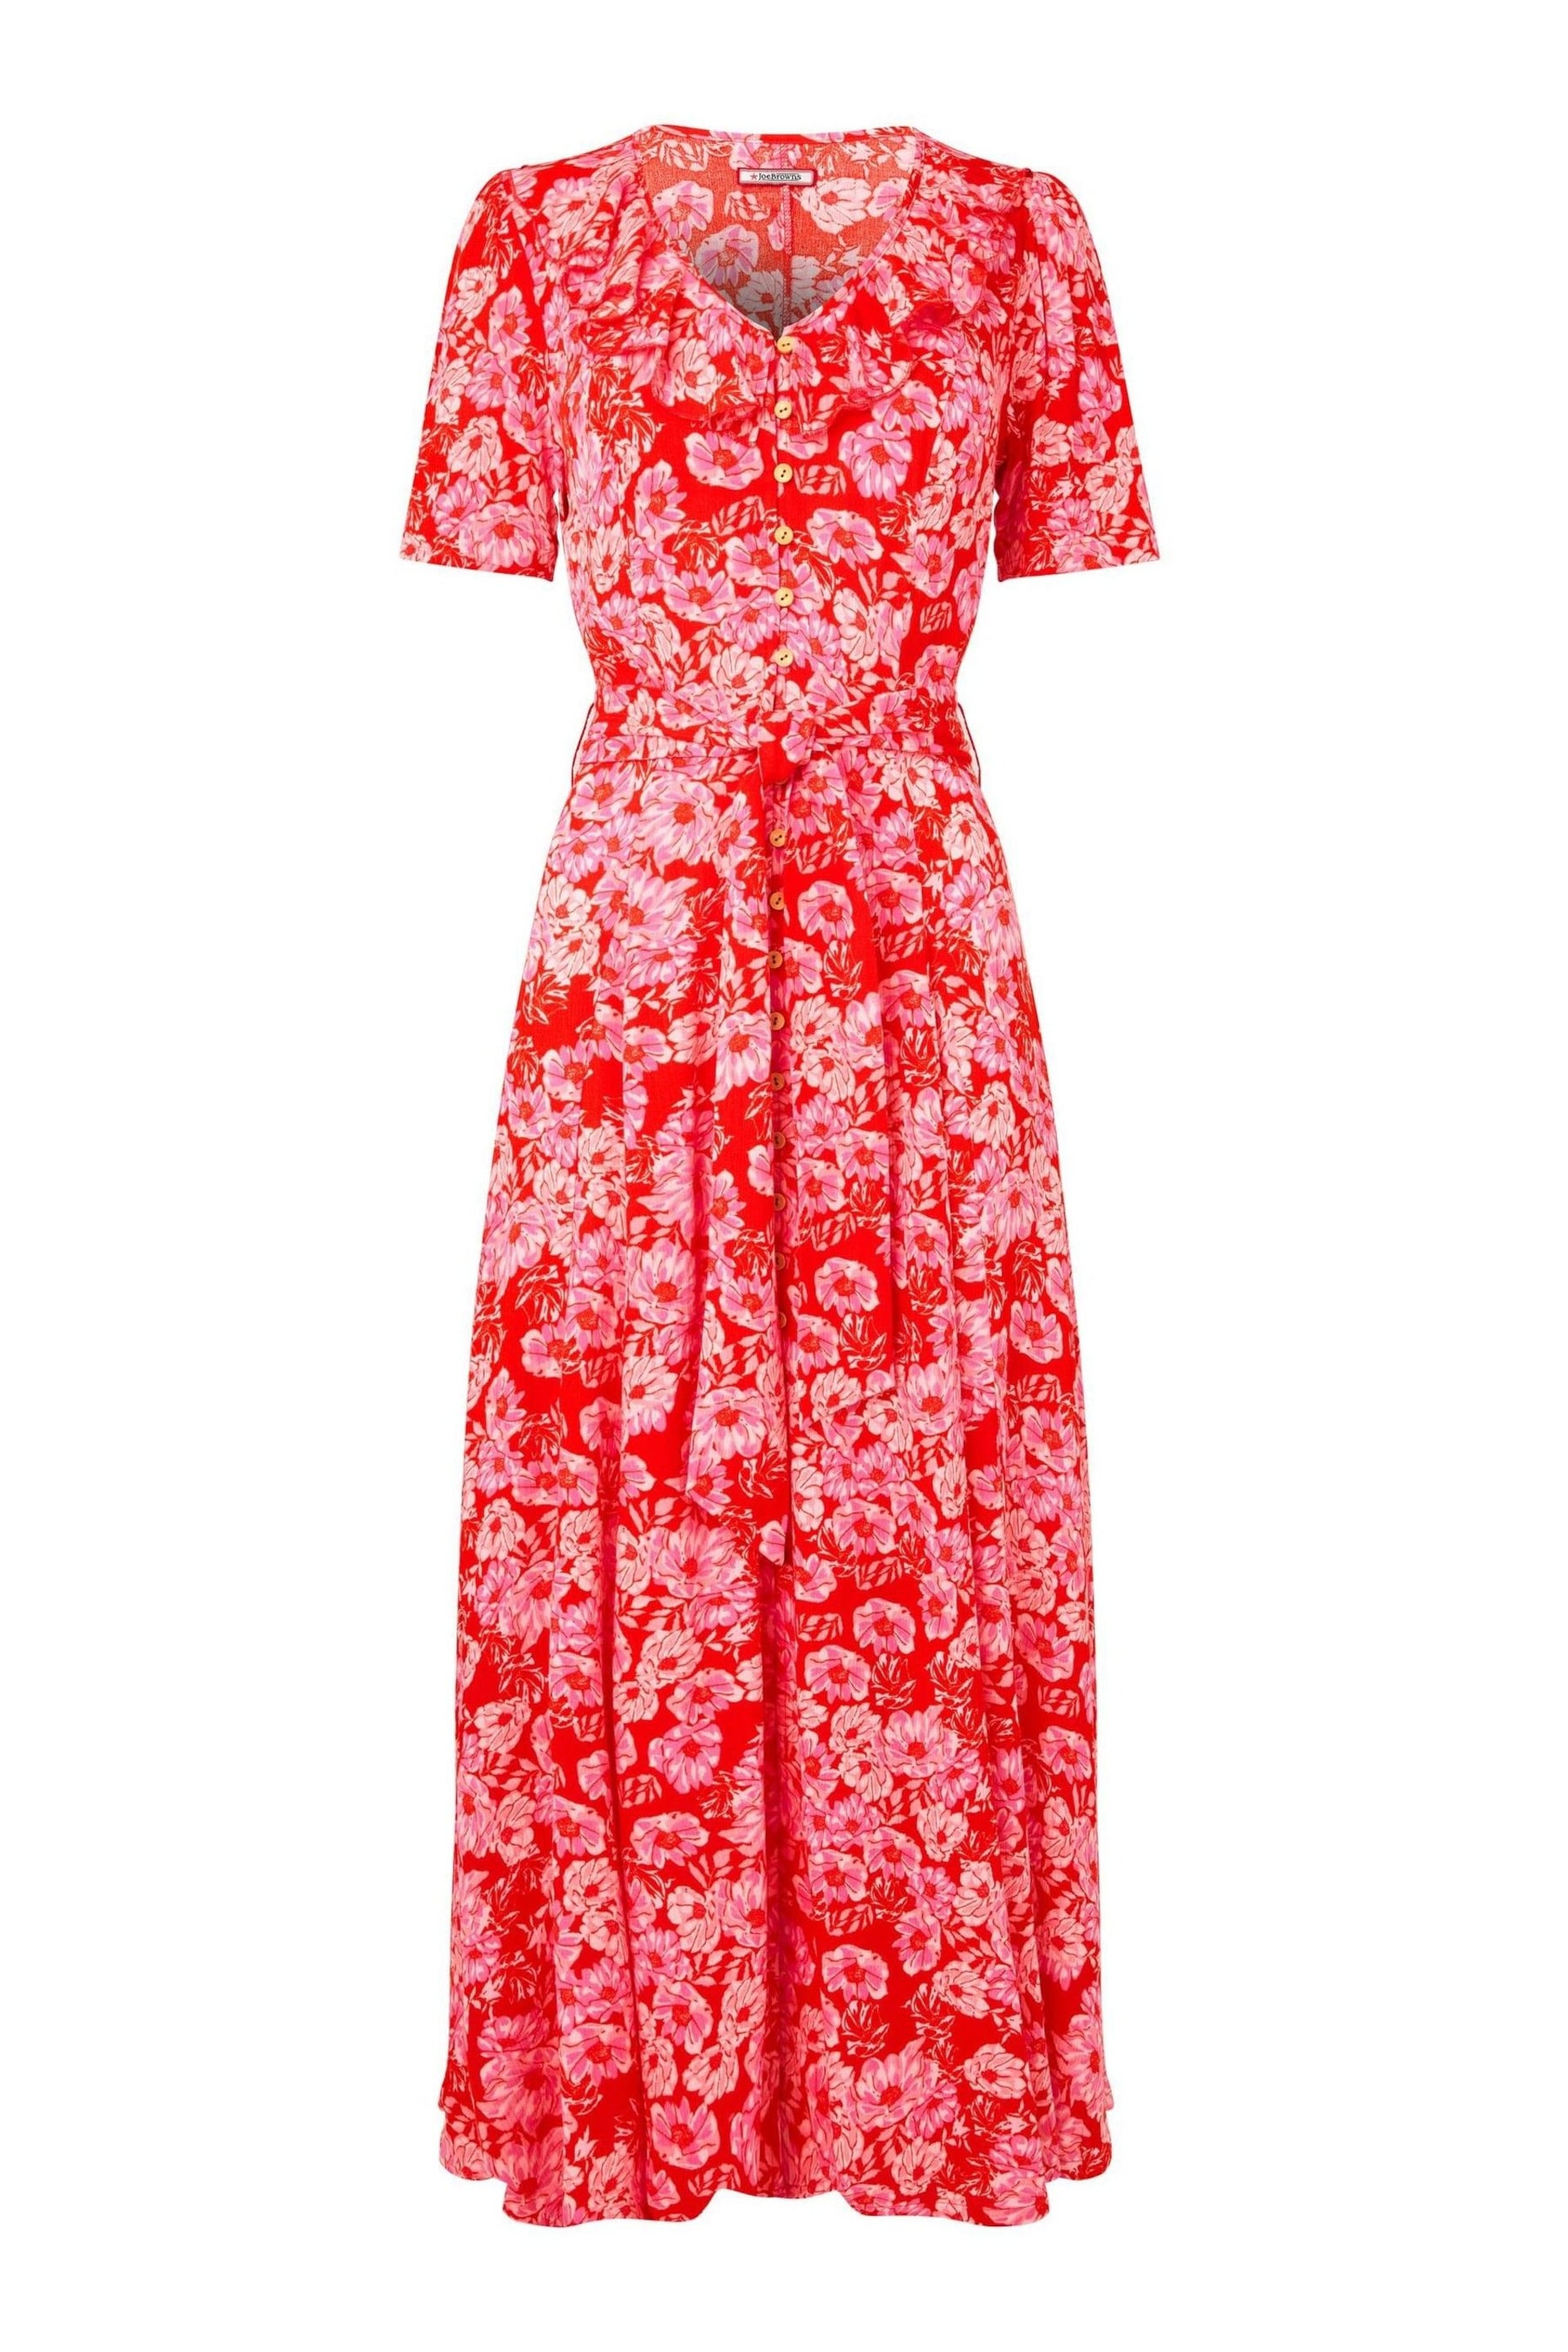 Joe Browns Red Vibrant V-Neck Frill Midi Dress - Image 7 of 7